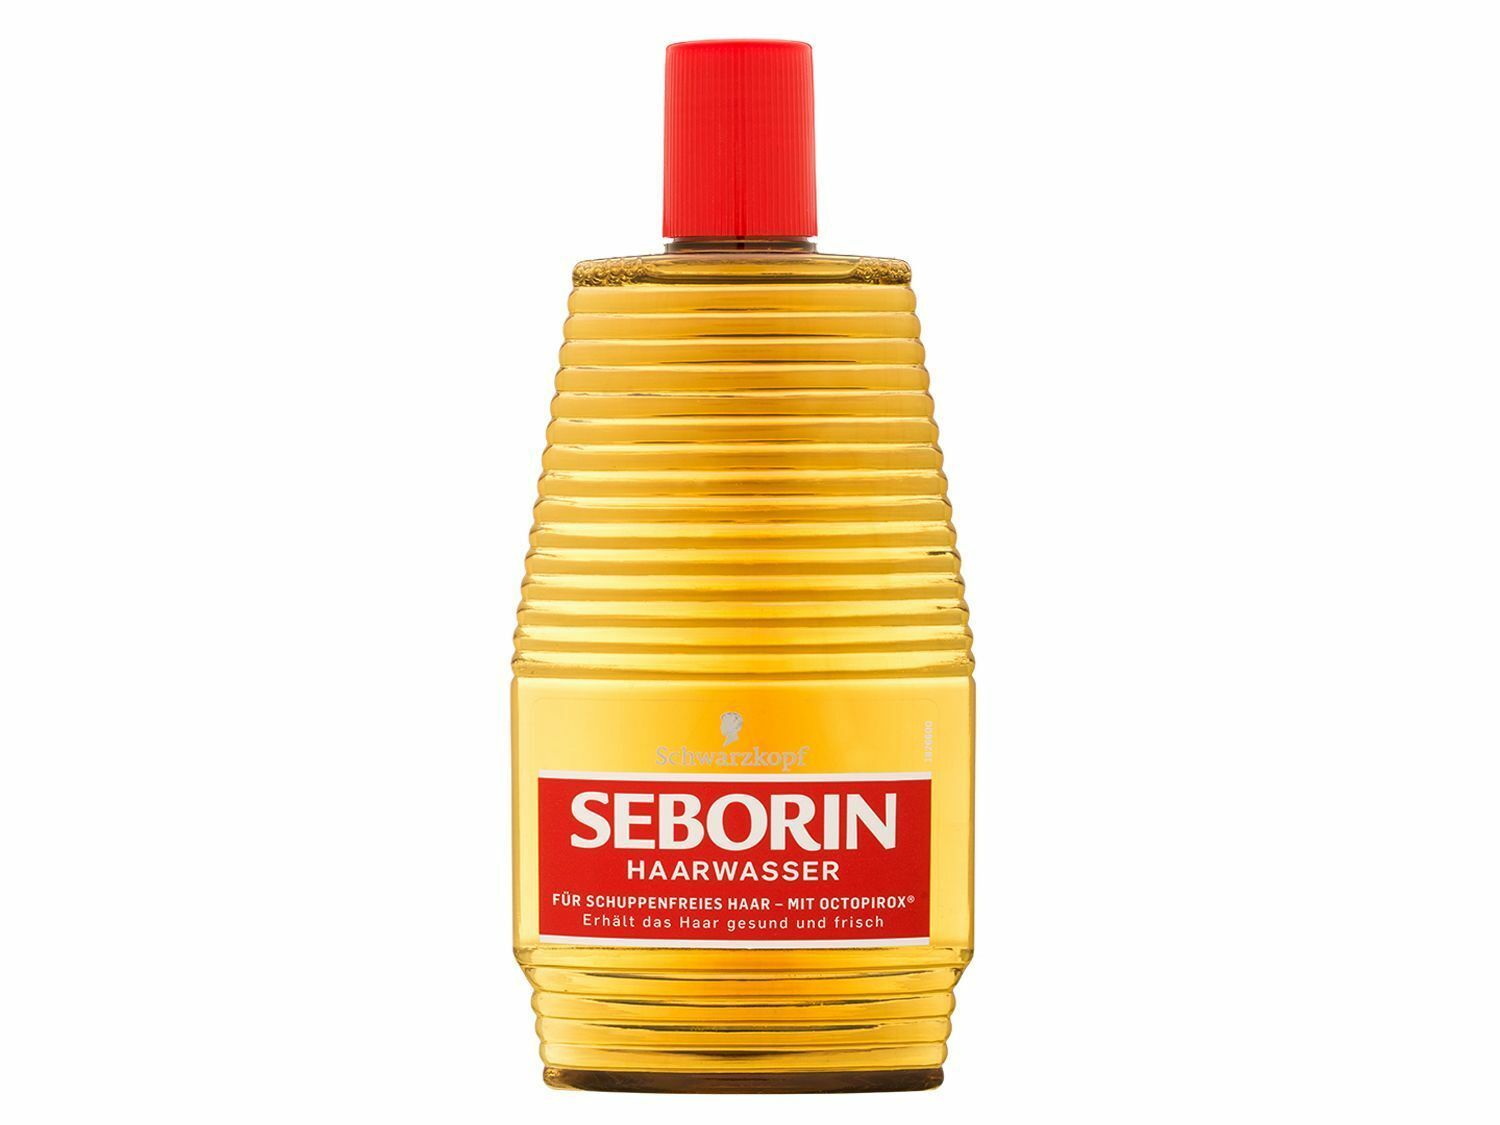 Seborin Haarwasser Hair Tonic - 400ml - Made in Germany-FREE SHIPPING